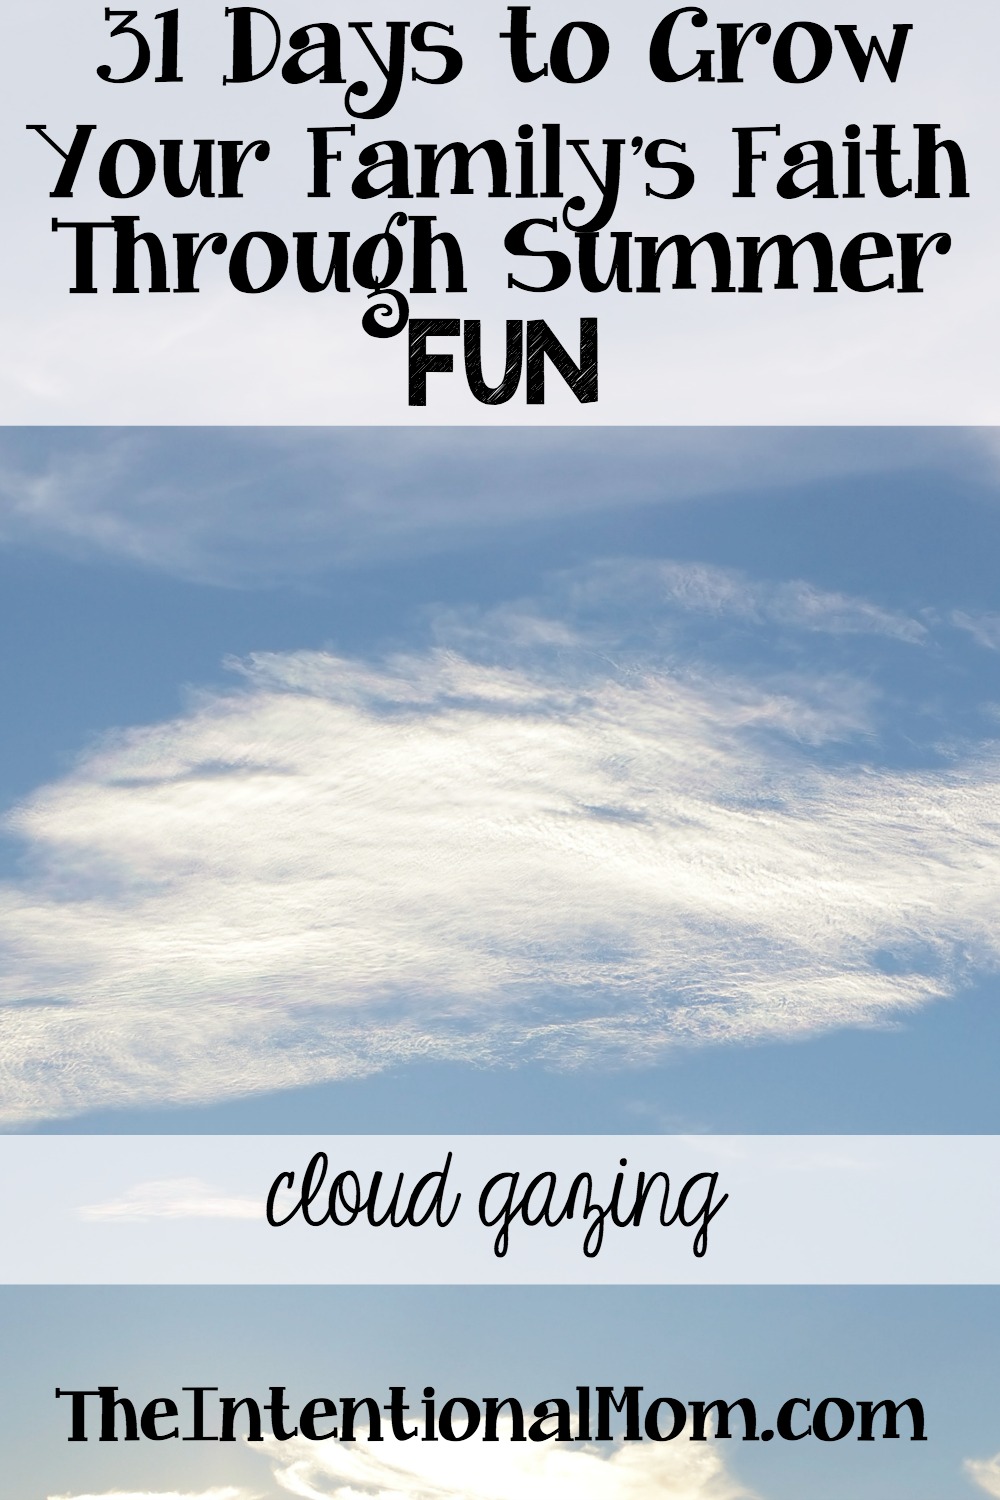 31 Ways to Grow Your Family’s Faith Through Summer Fun – Cloud Gazing